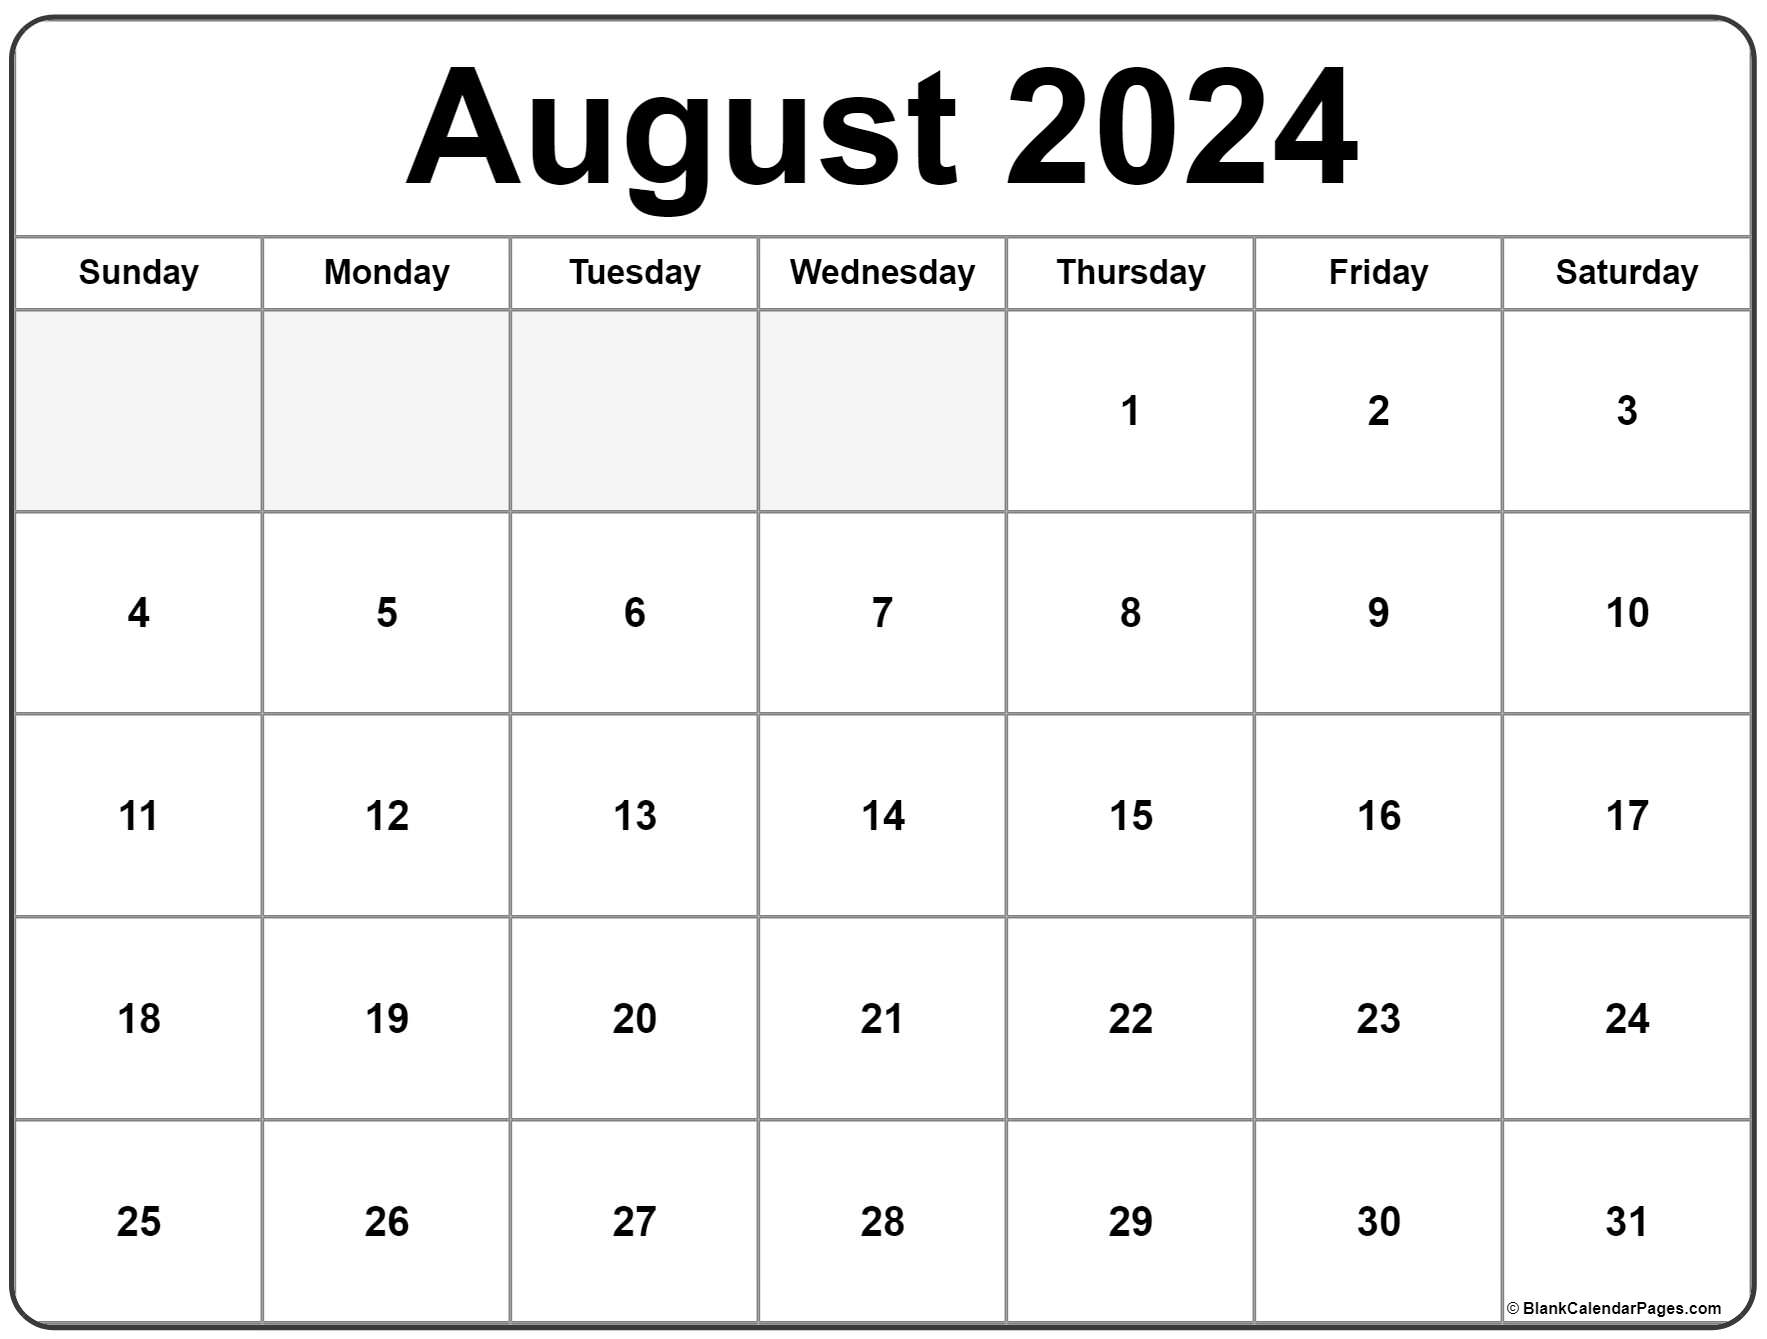 August 2022 Uf Calendar April Calendar 2022